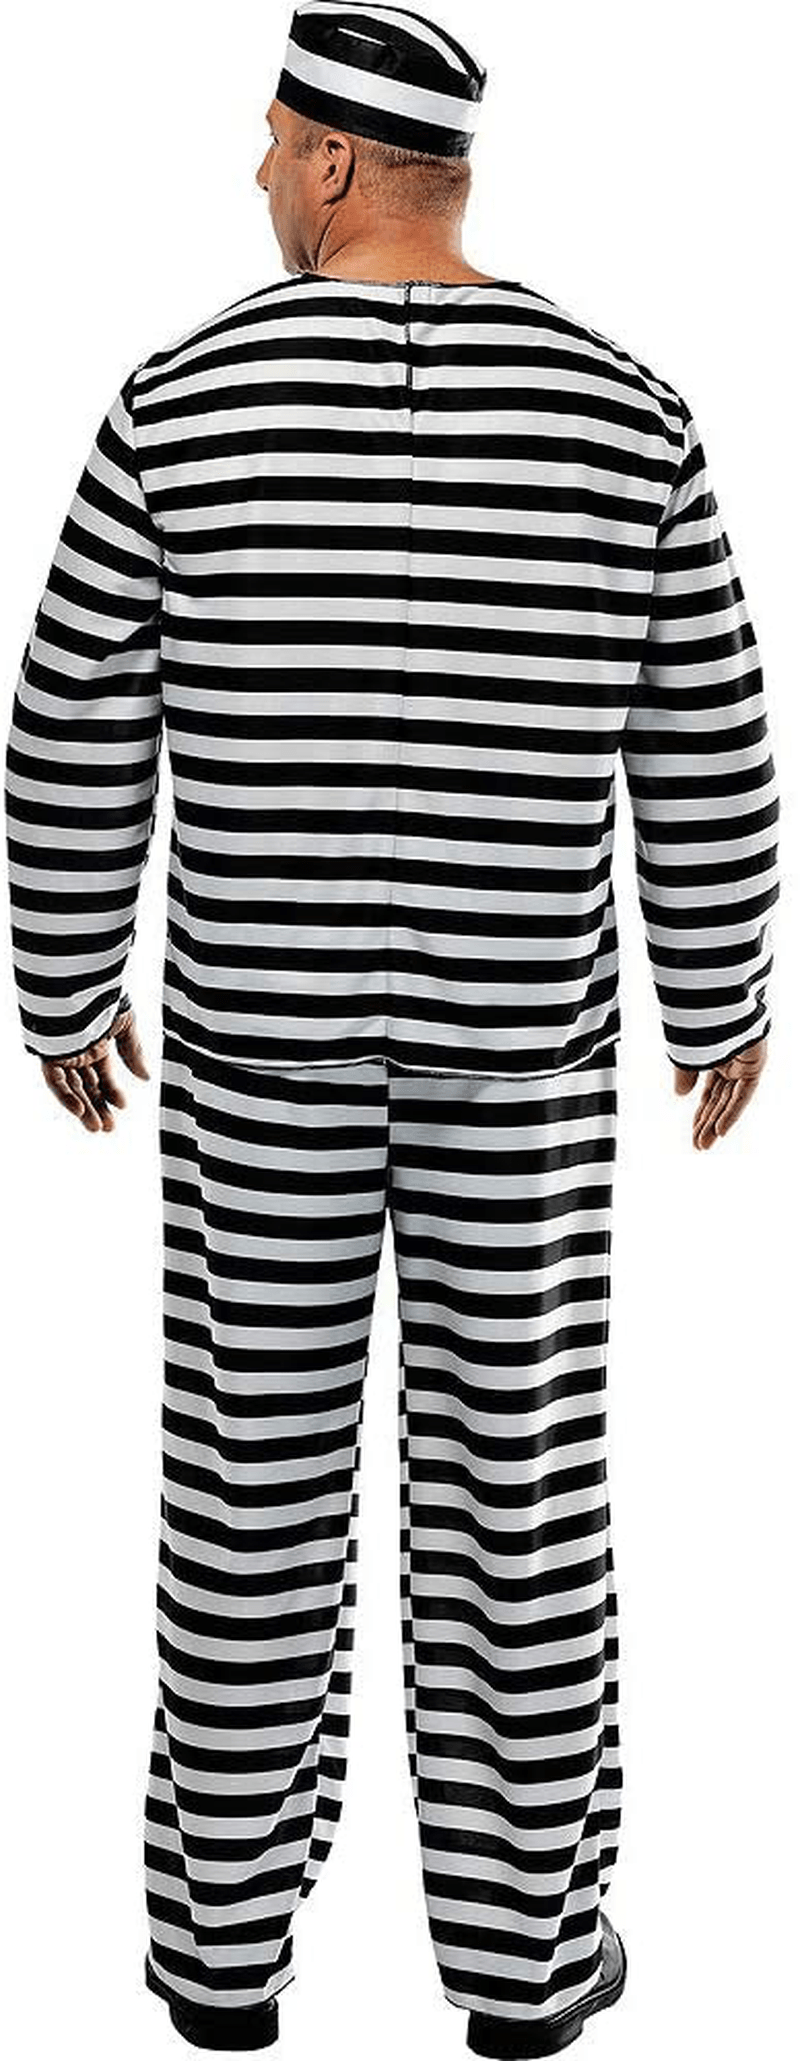 Amscan 840228 Men Jail Prisoner Costume Set - Plus Size, Black/White